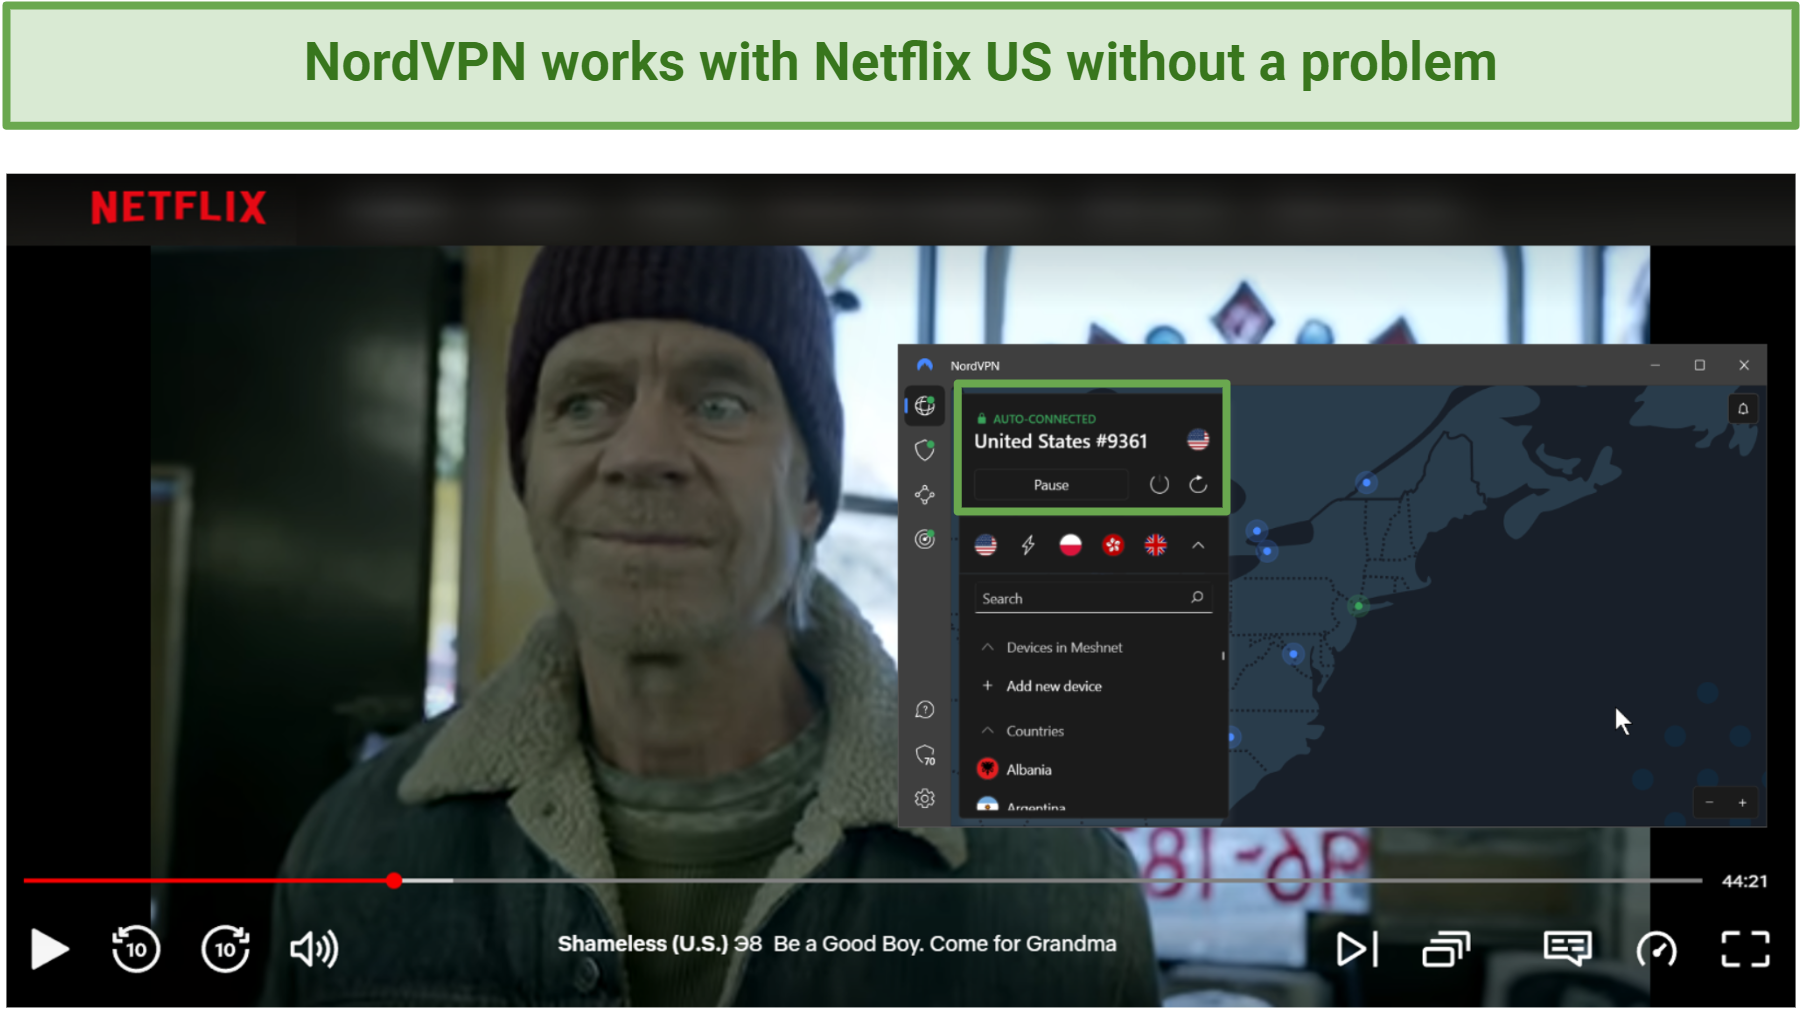 Screenshot of Shameless (US) show on Netflix accessed via NordVPN